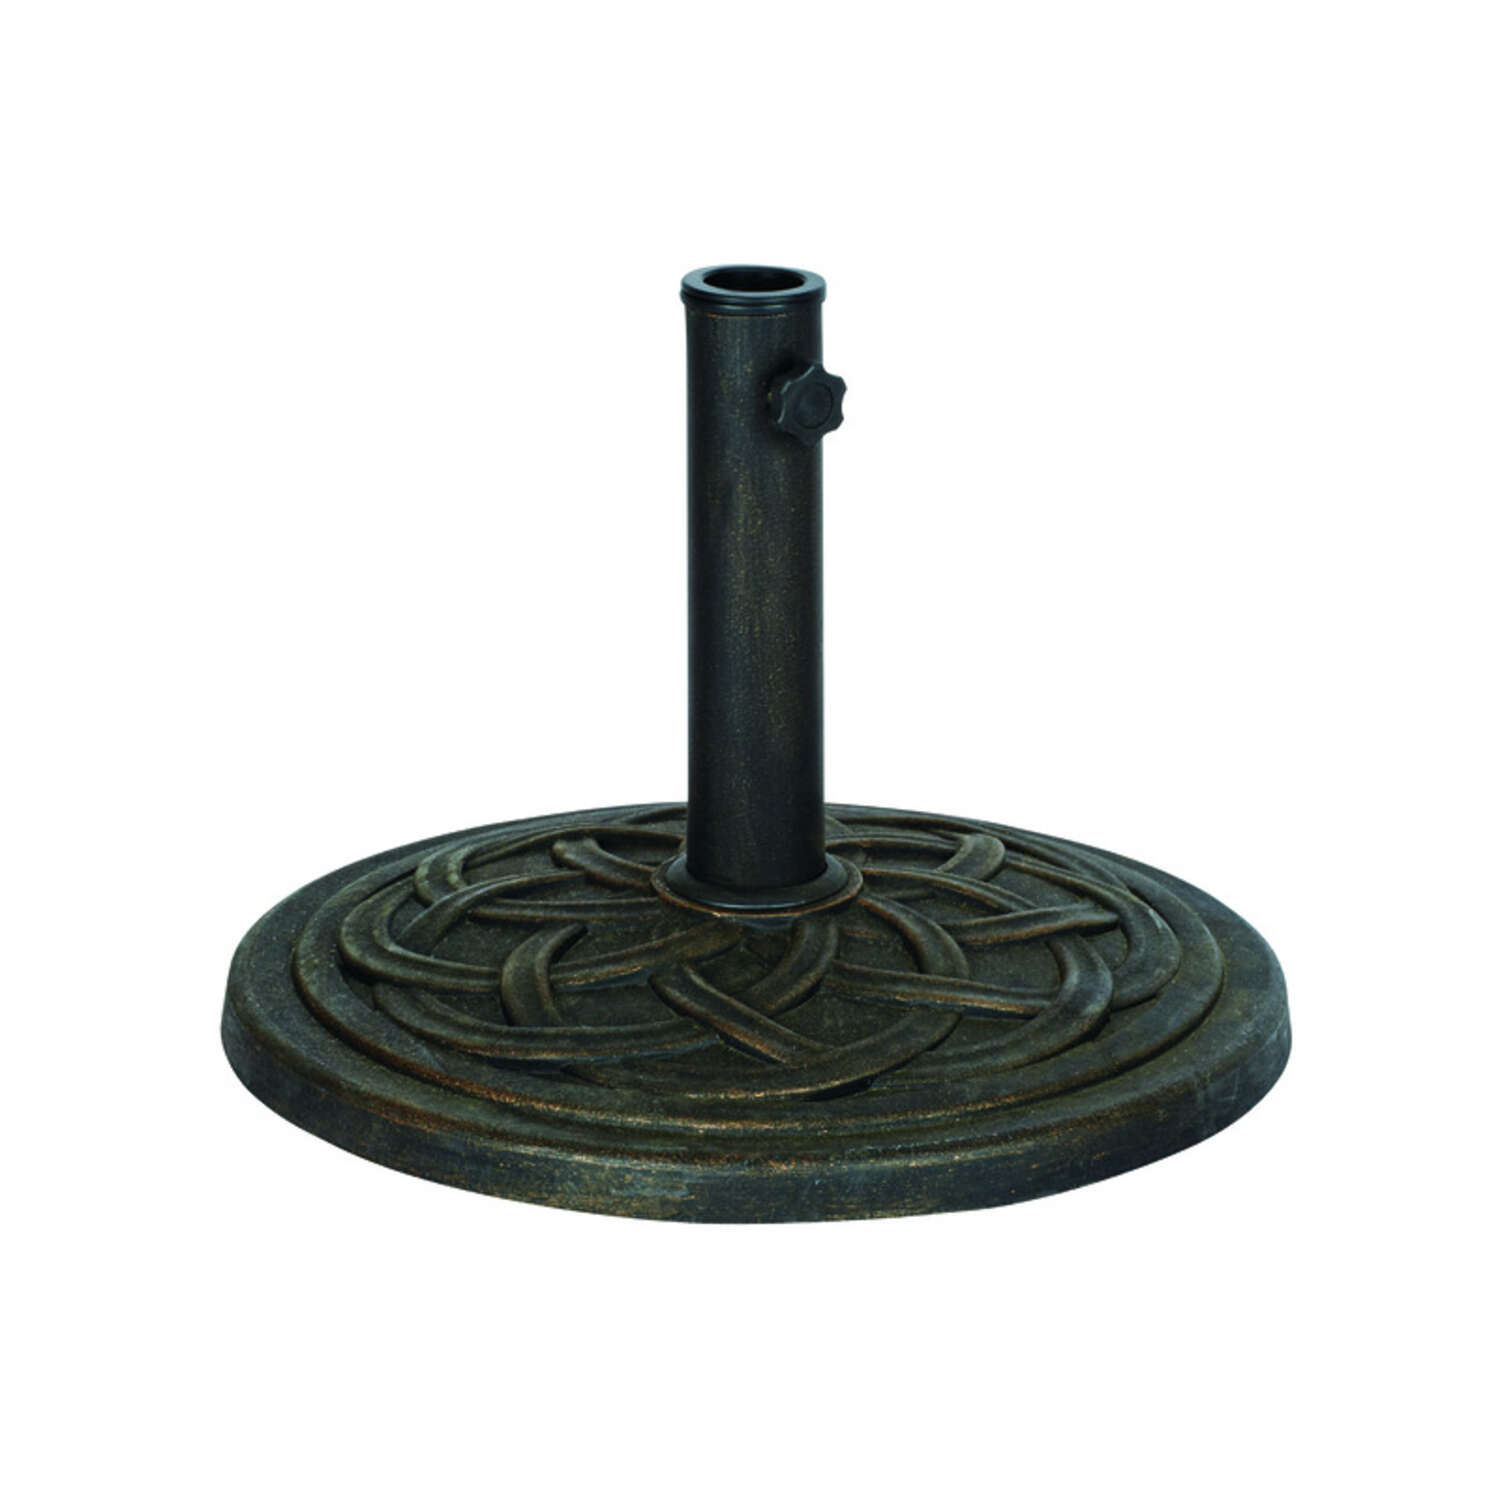 Bond Manufacturing 60474A Gaelen Umbrella Base 12kg Renewed Antique Bronze 